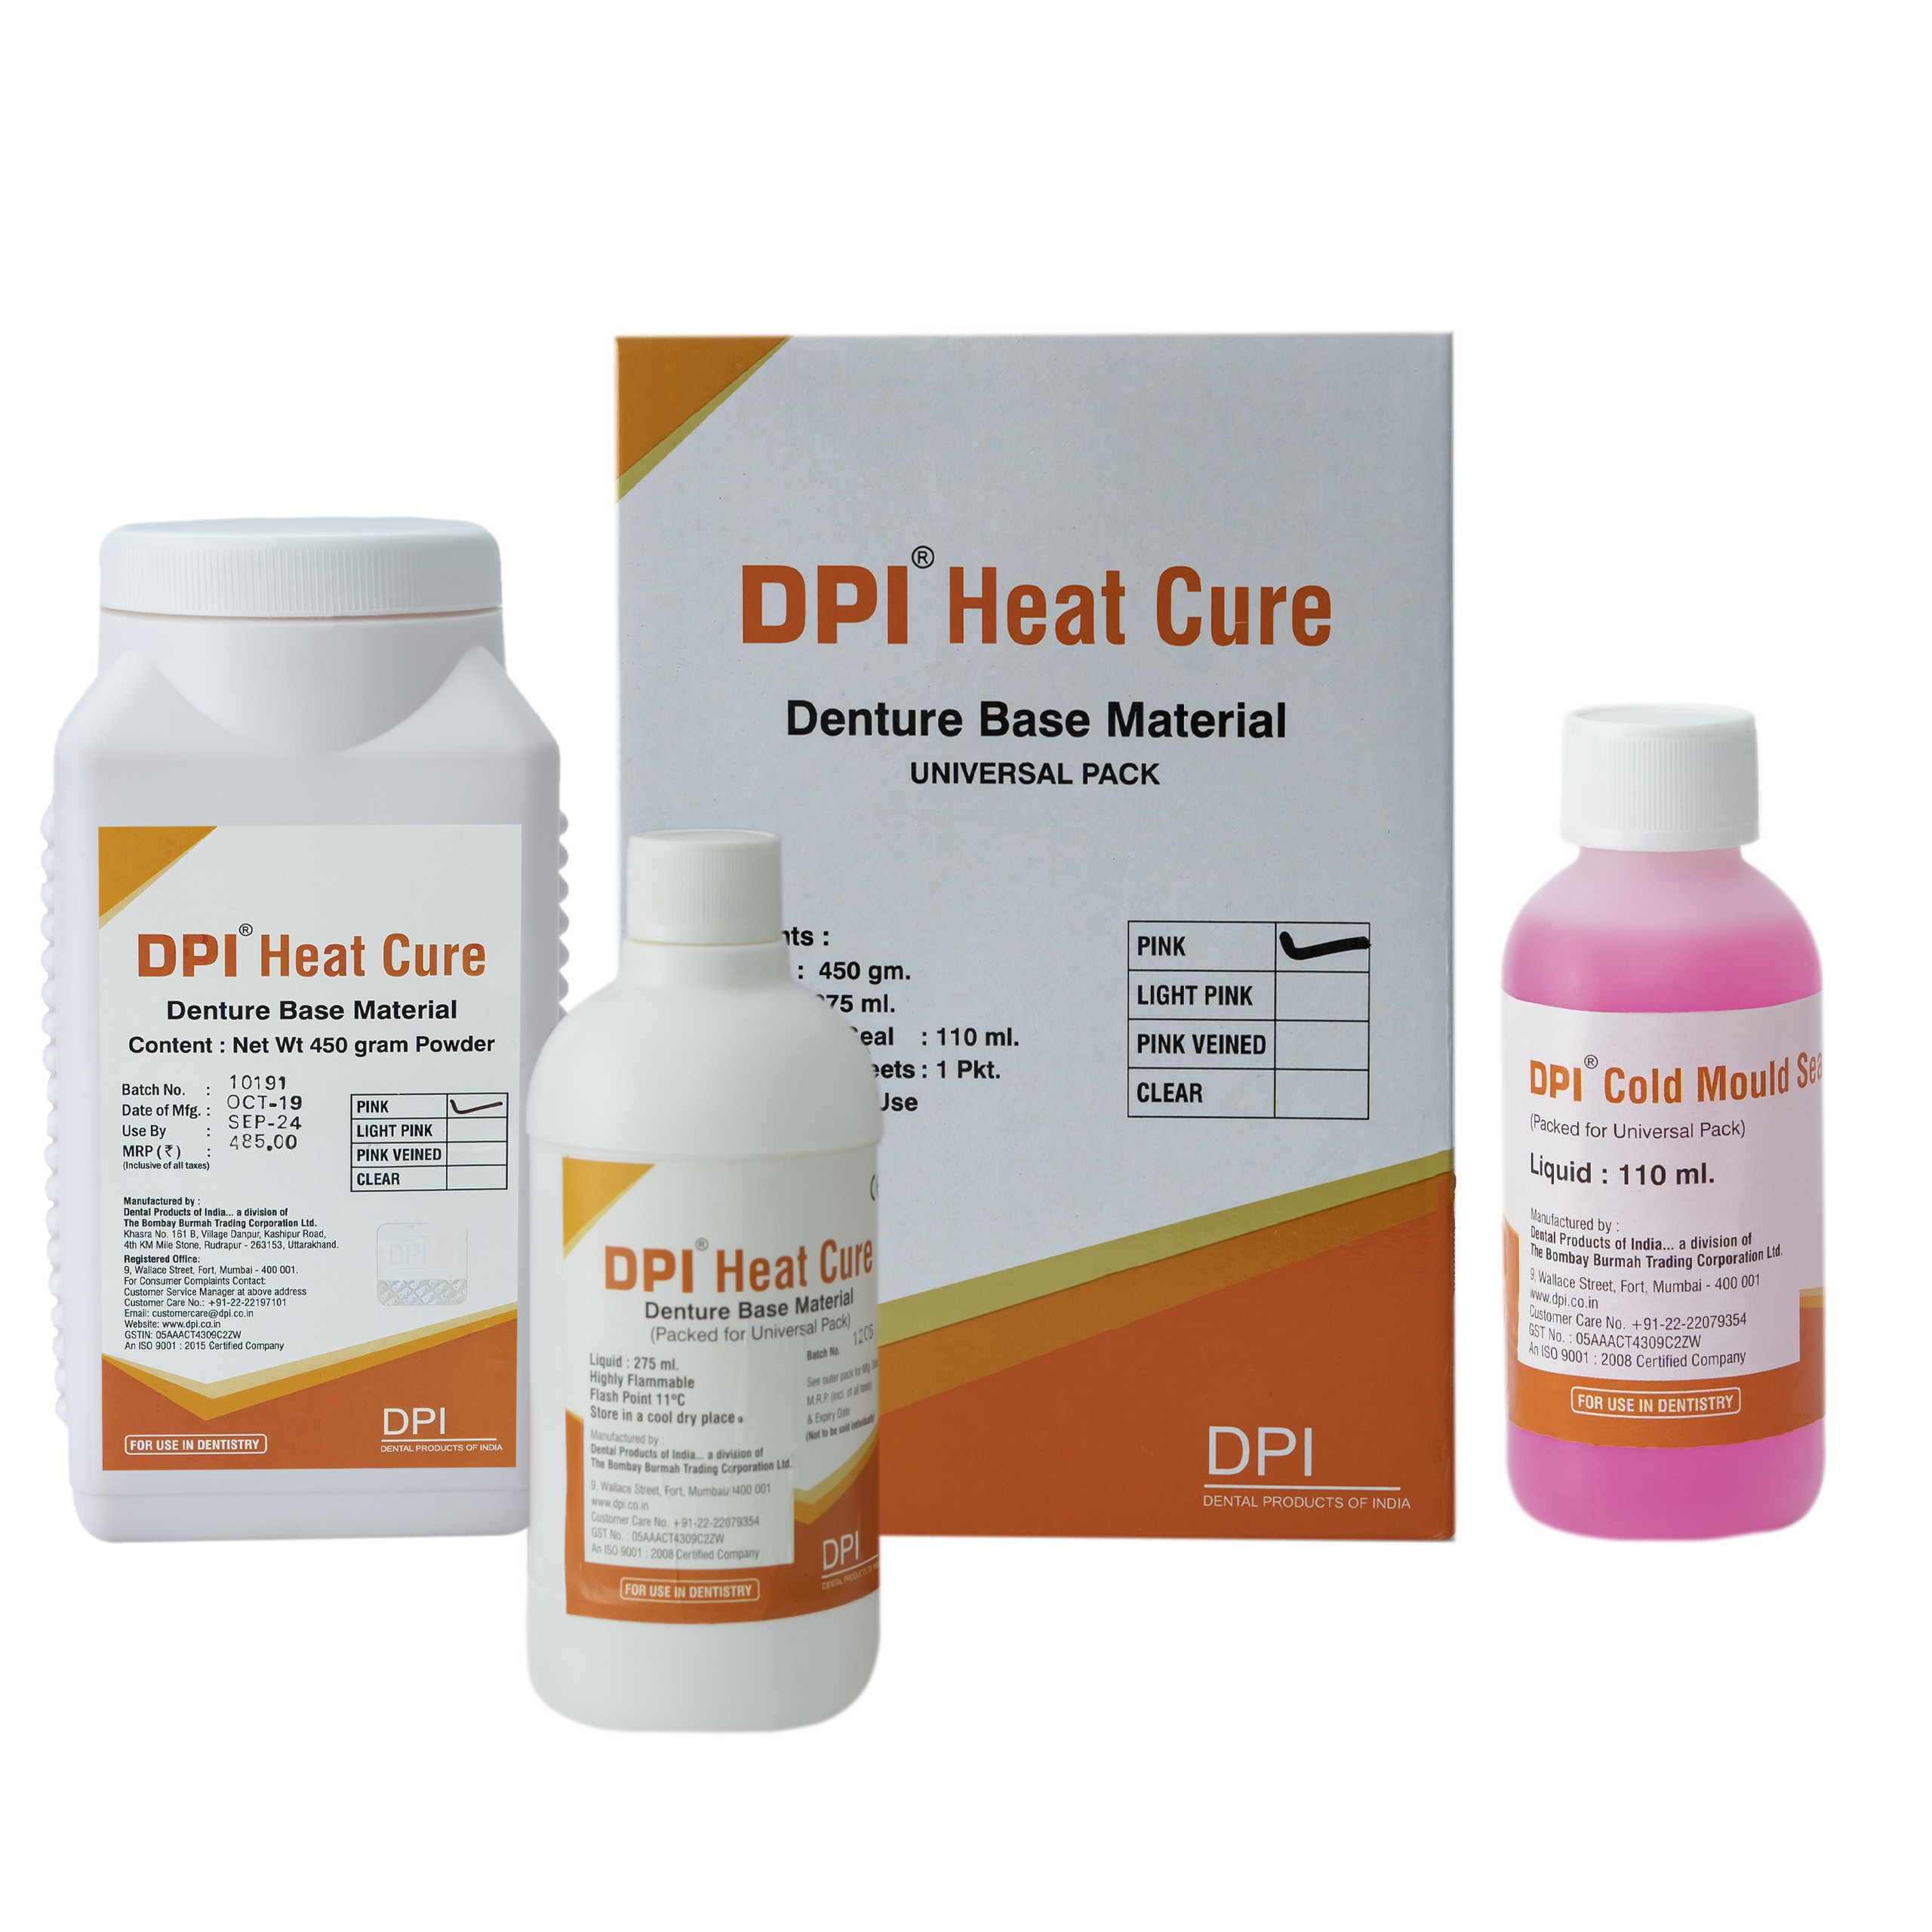 DPI Heat Cure Denture Base Material Universal Pack